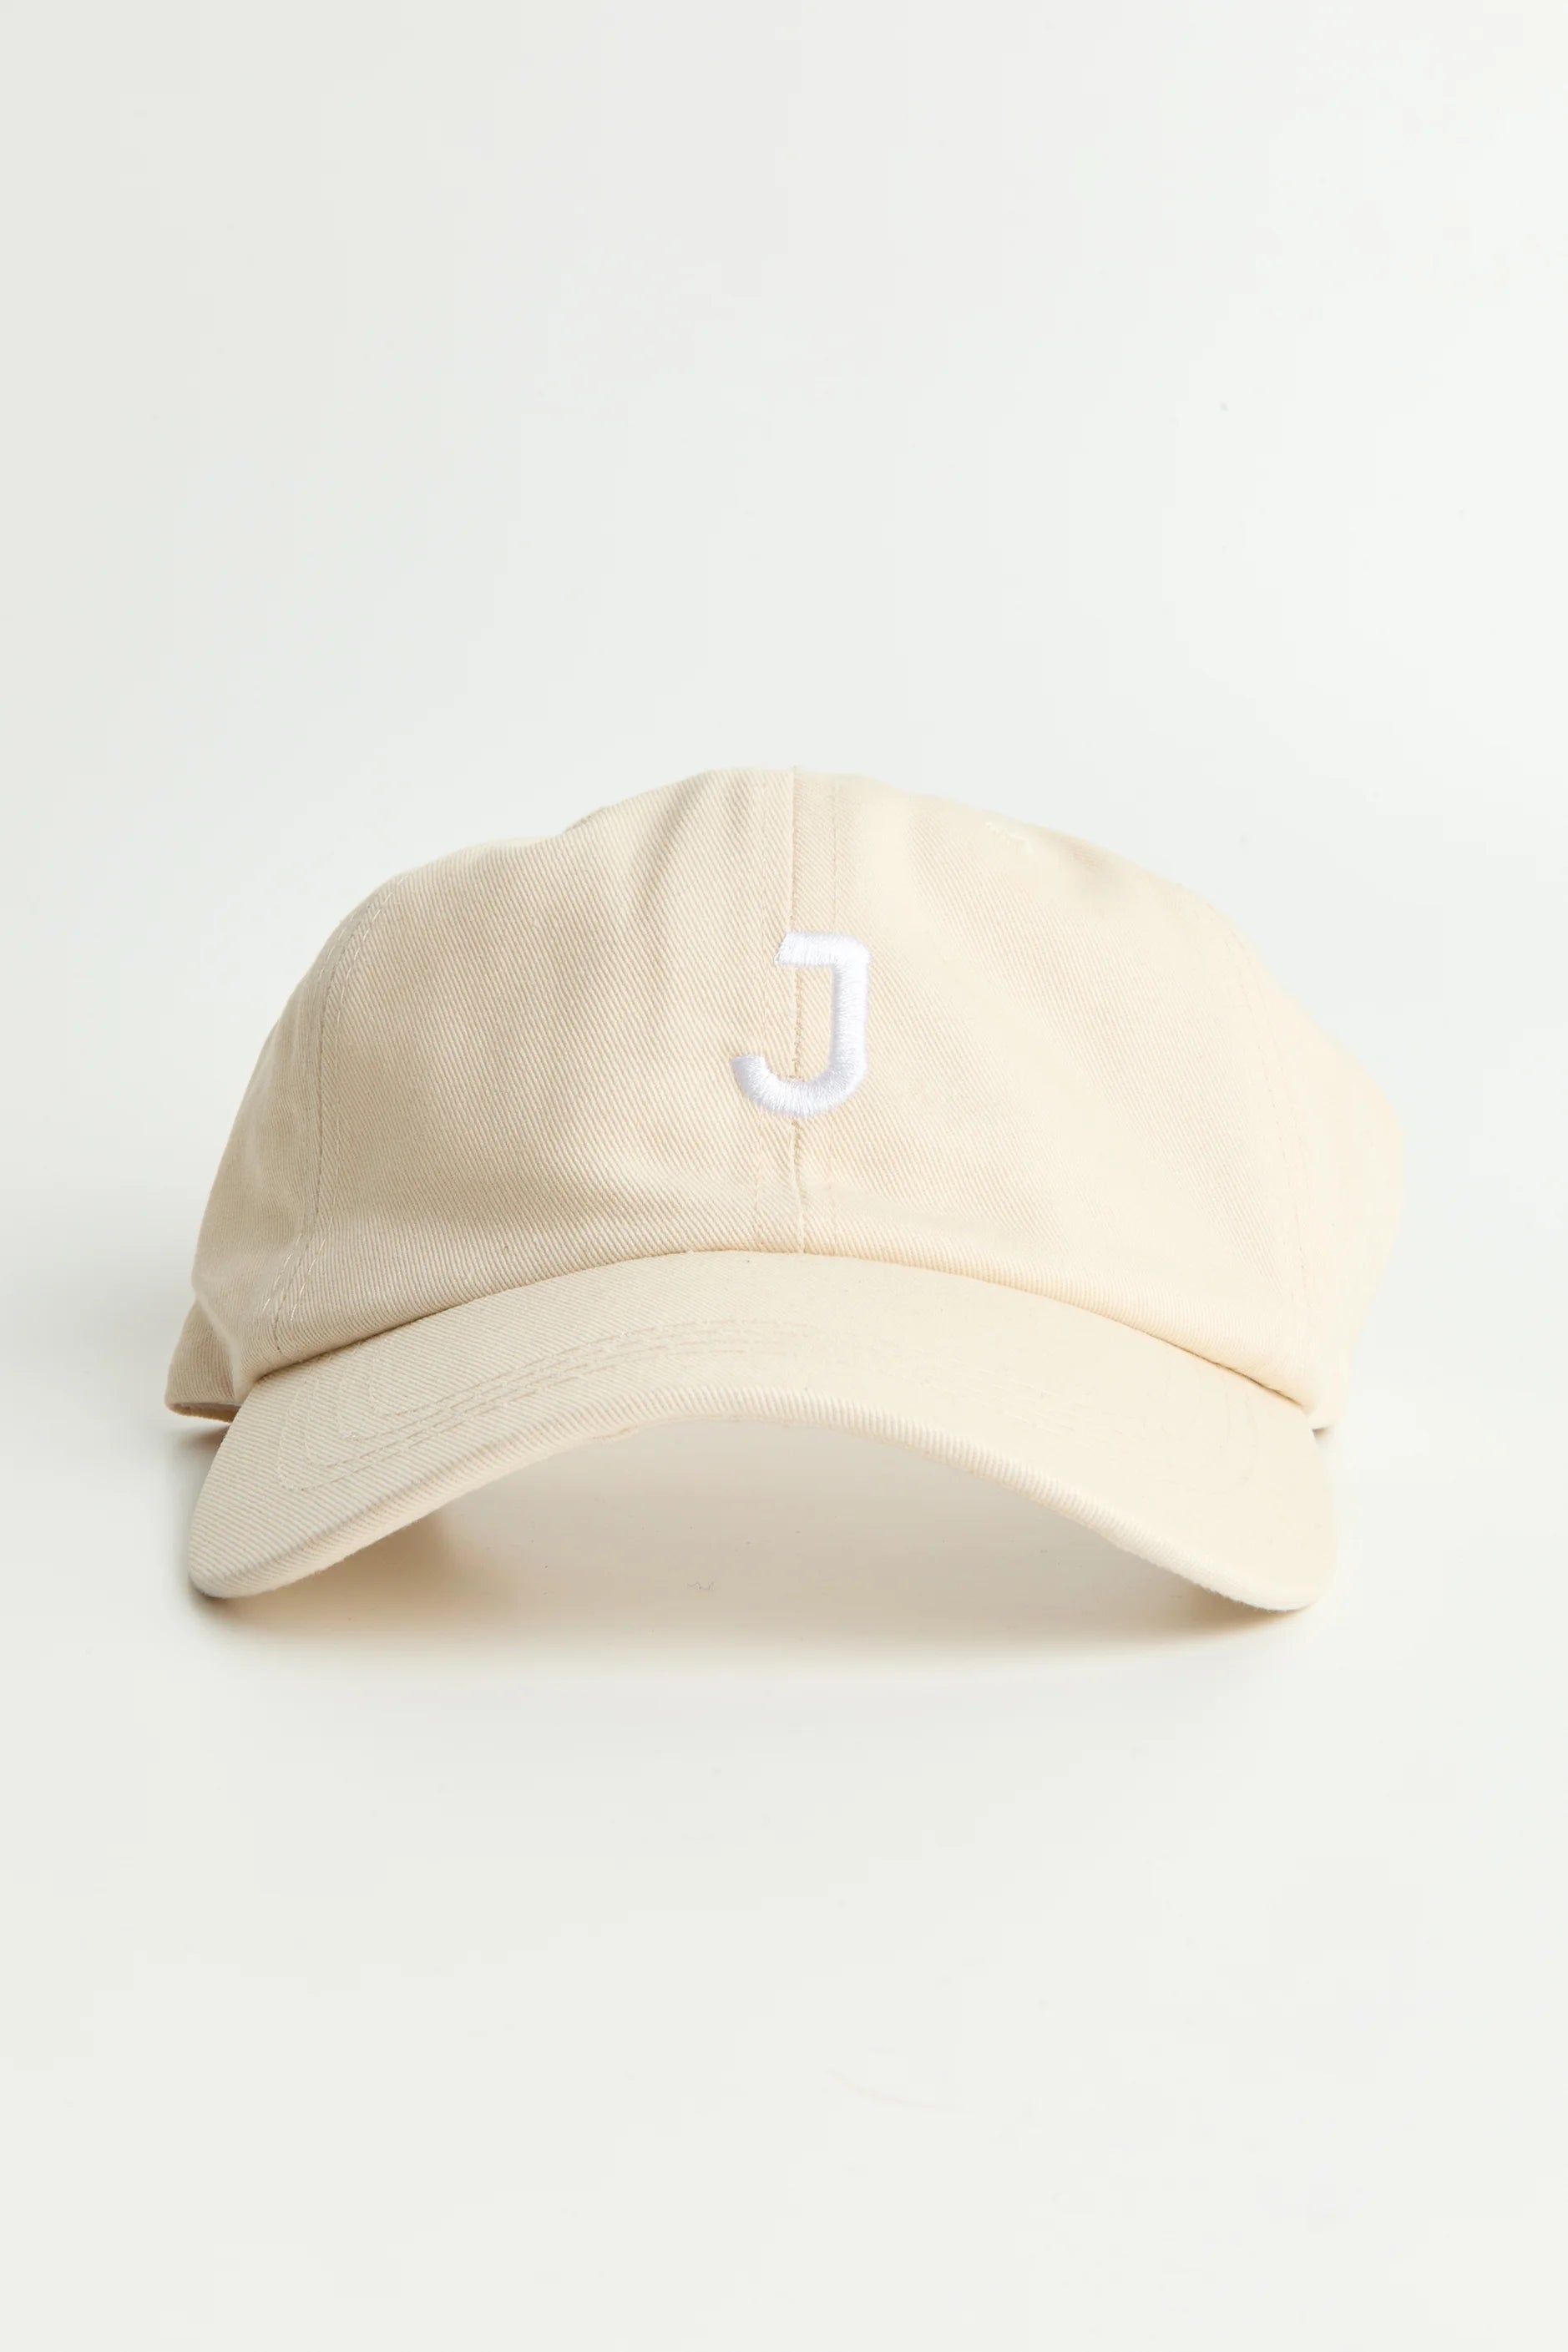 Classic JUV hat